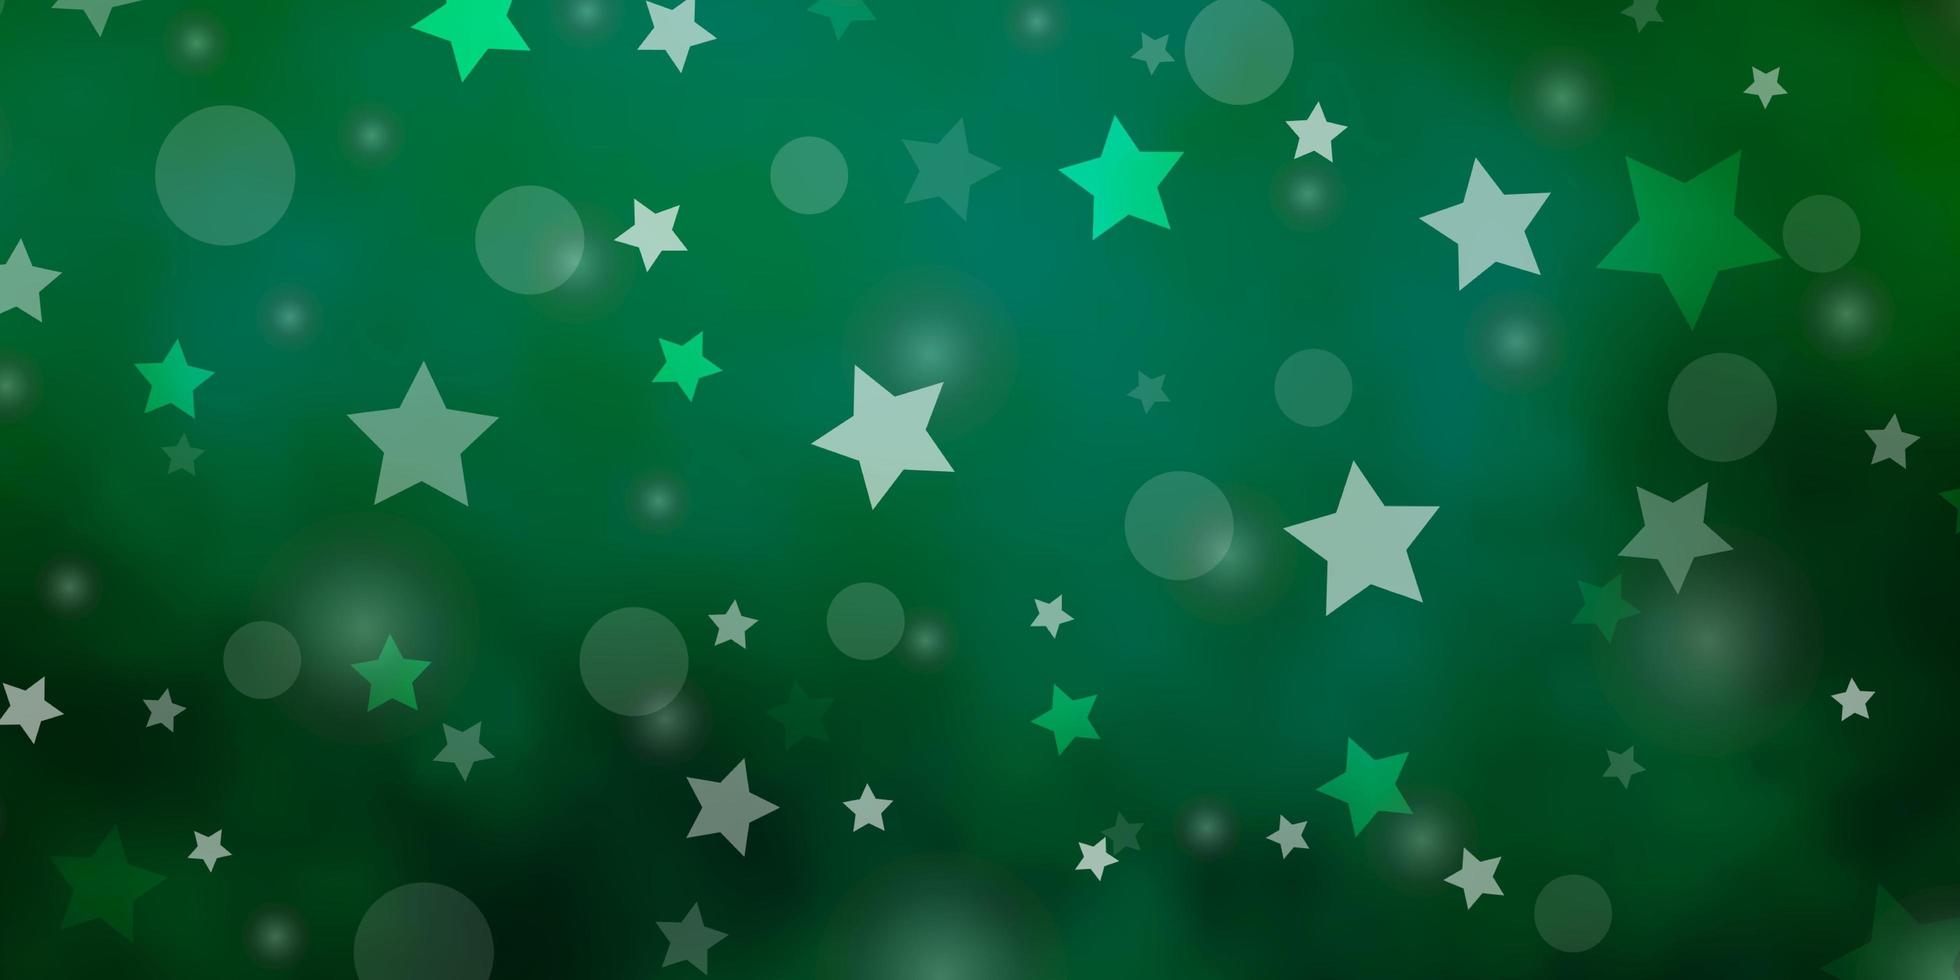 modelo de vetor verde claro com círculos, estrelas.